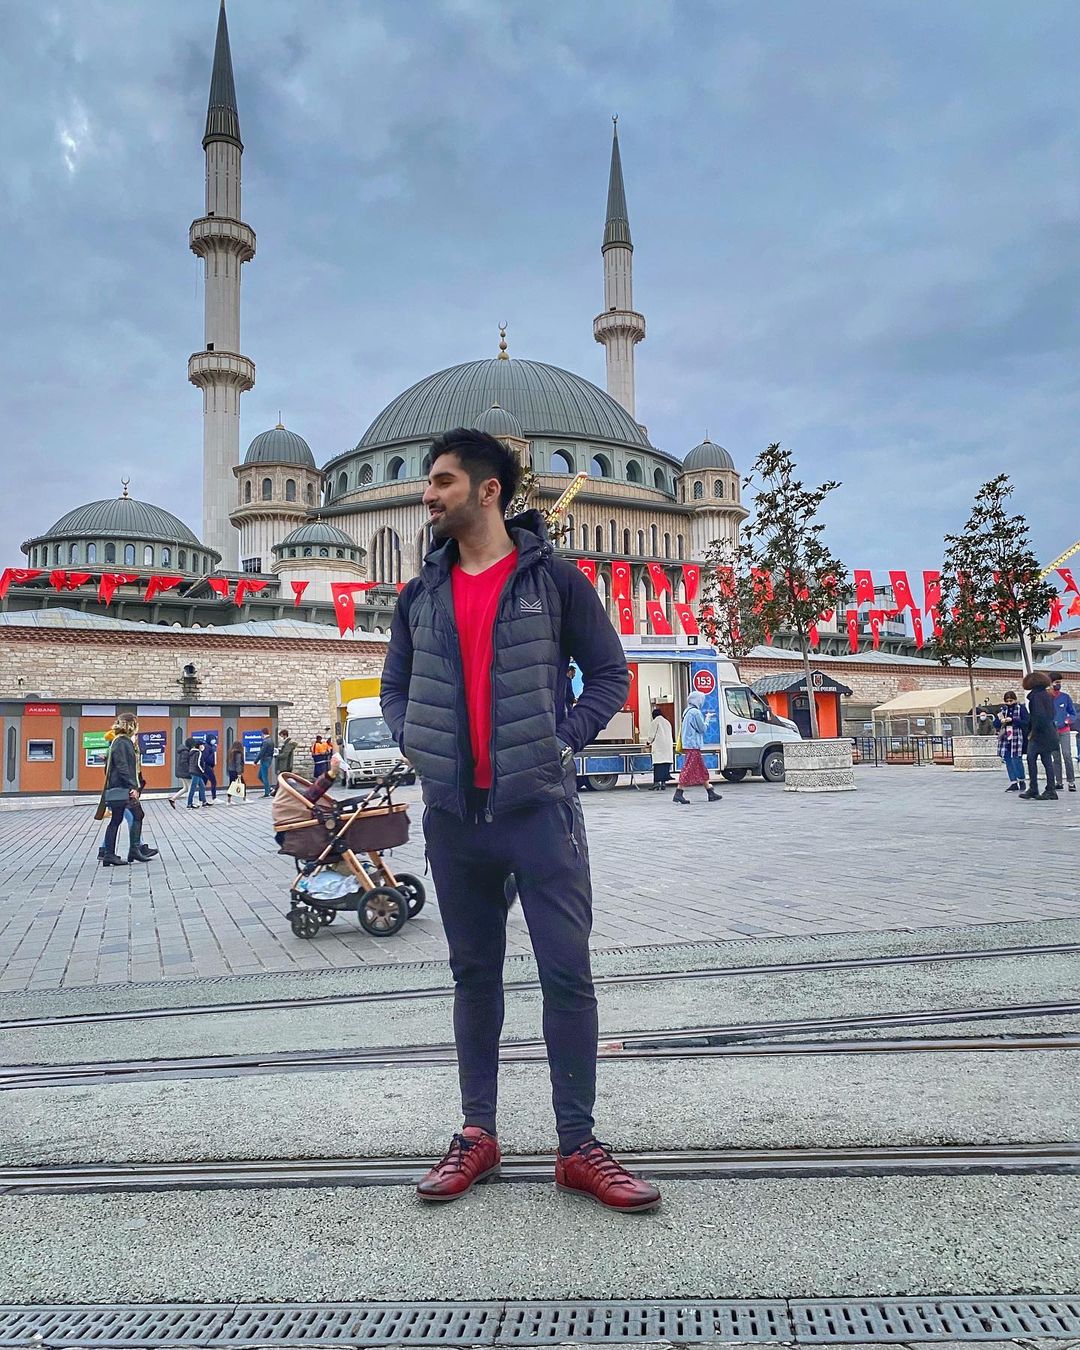 Aiman Khan and Muneeb Butt Enjoying Holidays in Turkey - Day 1